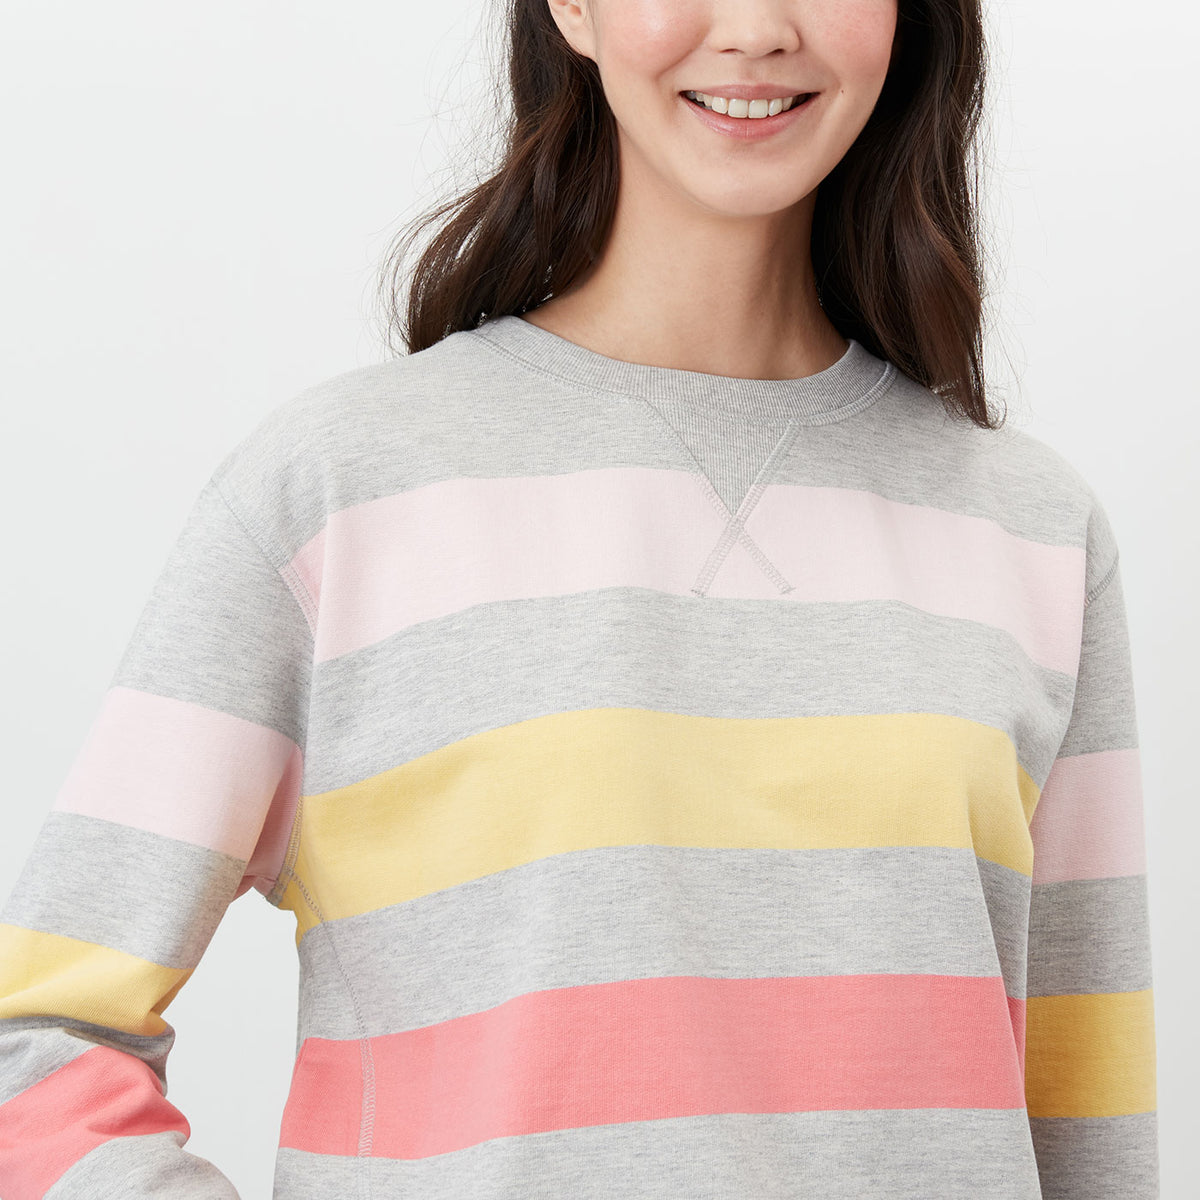 The Monique Sweatshirt - Multi Stripe